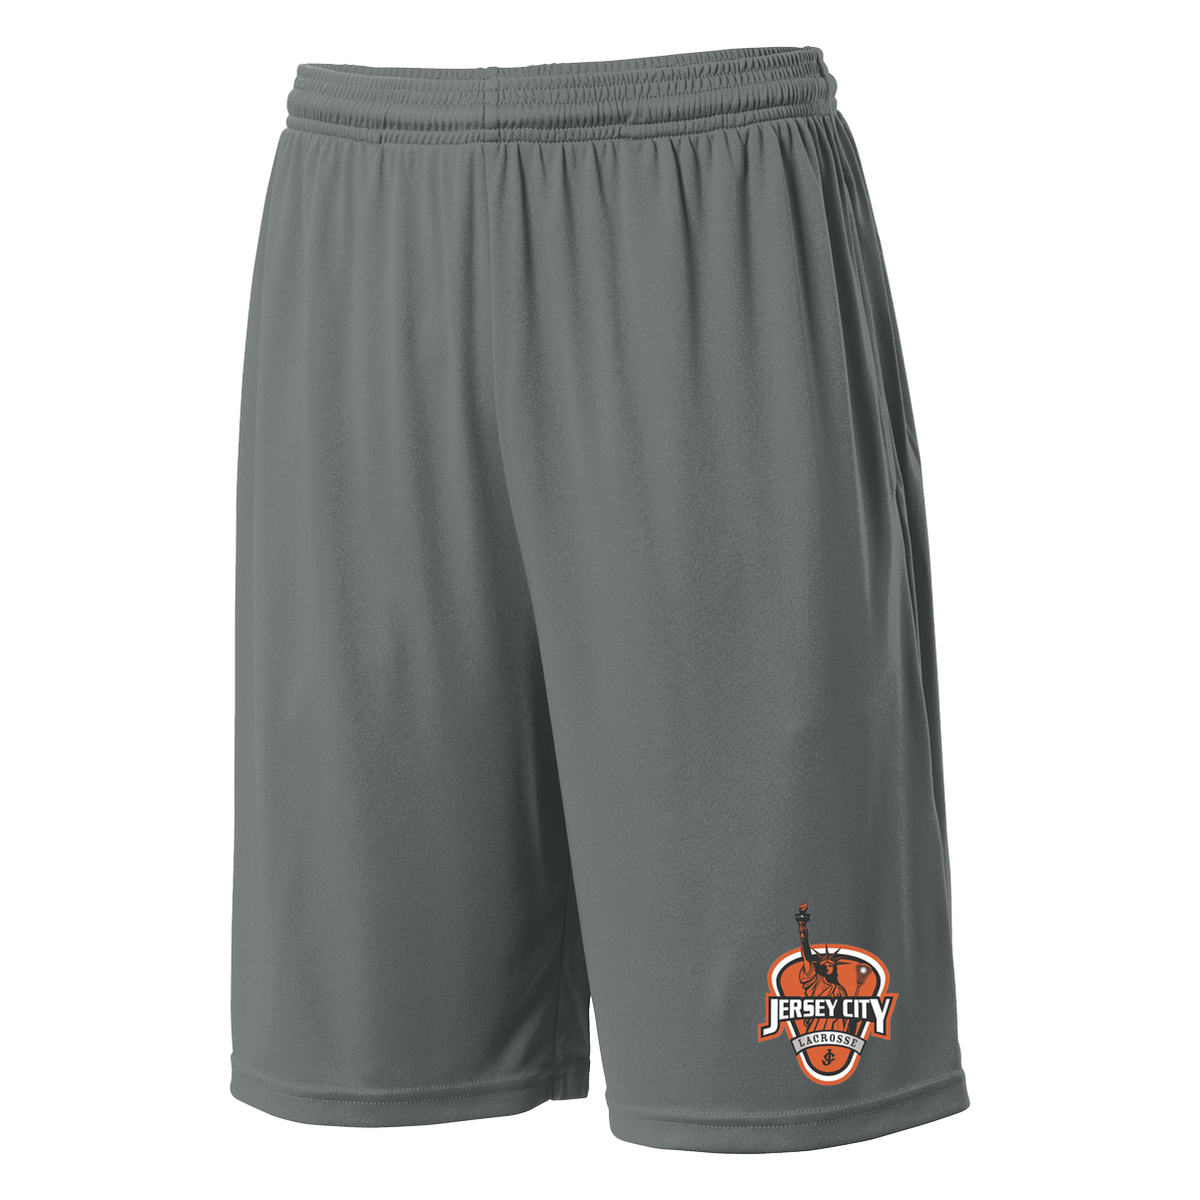 Jersey City Lacrosse Grey Shorts Shield Logo